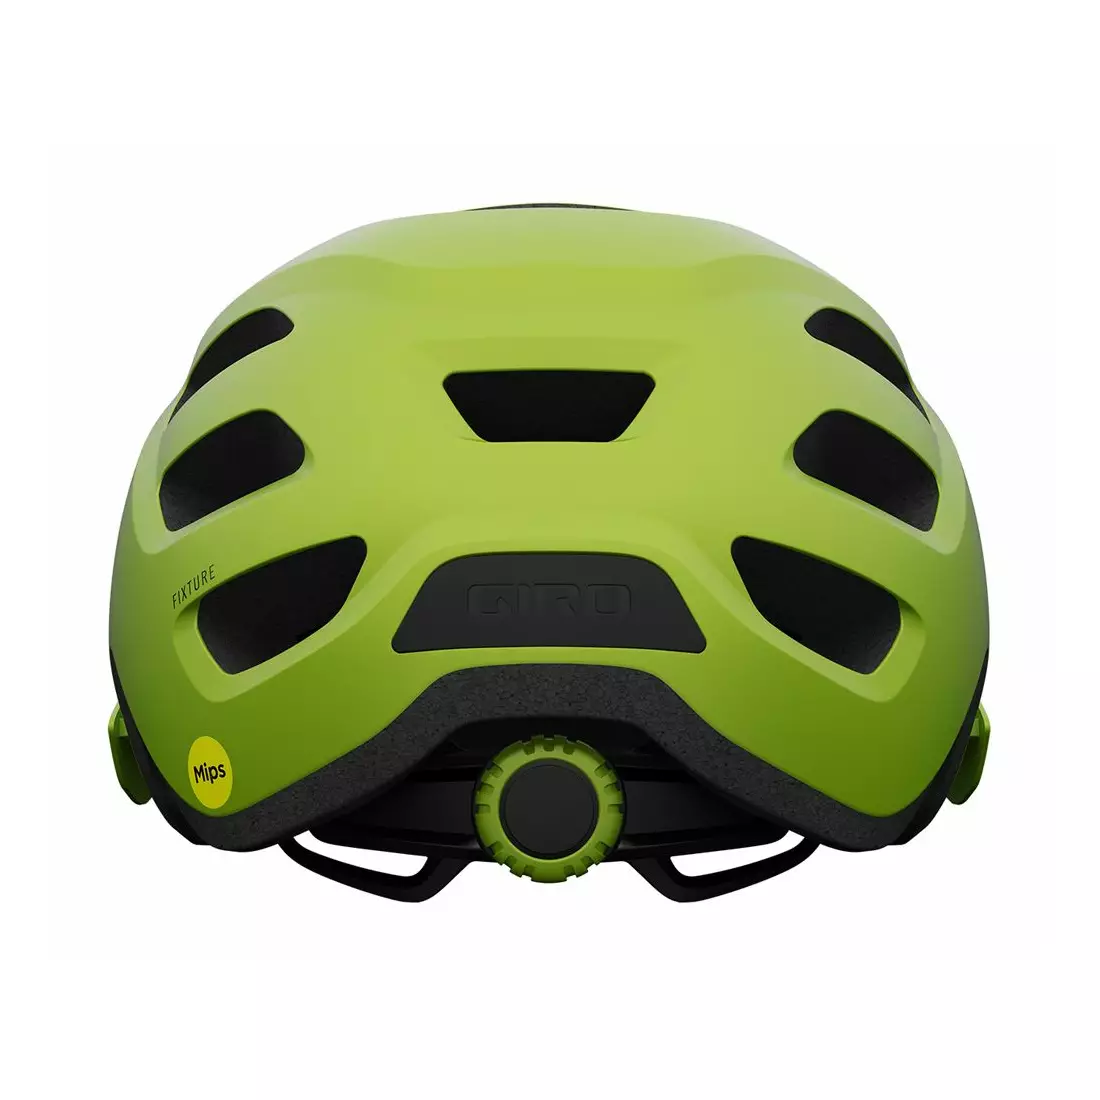 GIRO FIXTURE Cyklistická helma mtb, matte ano lime 